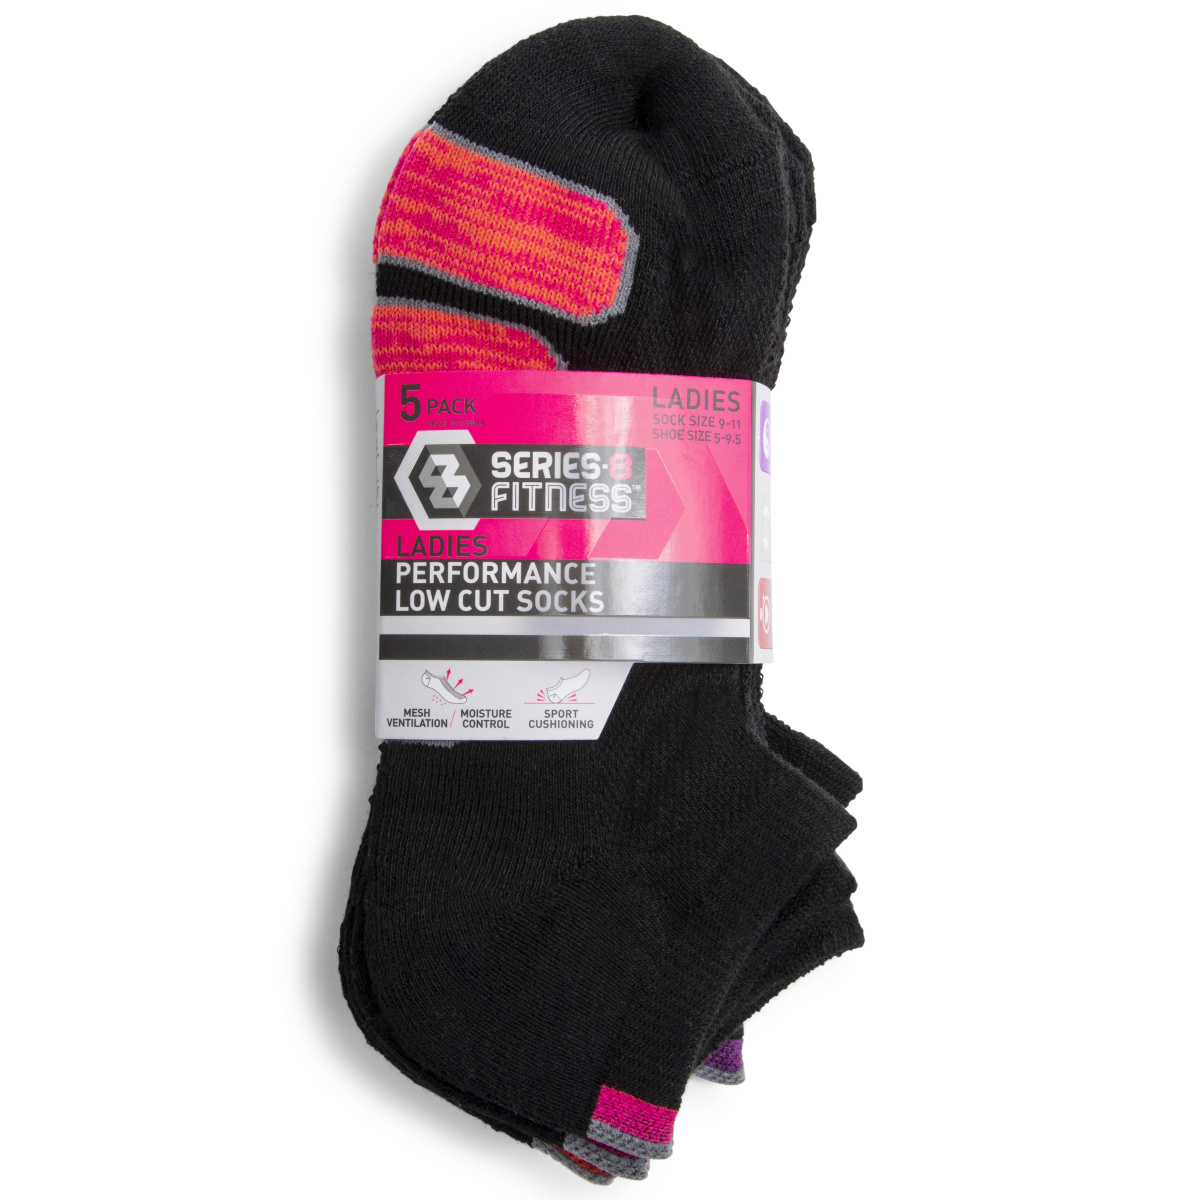 series-8 fitness™ ladies performance low-cut socks 5-pack - black